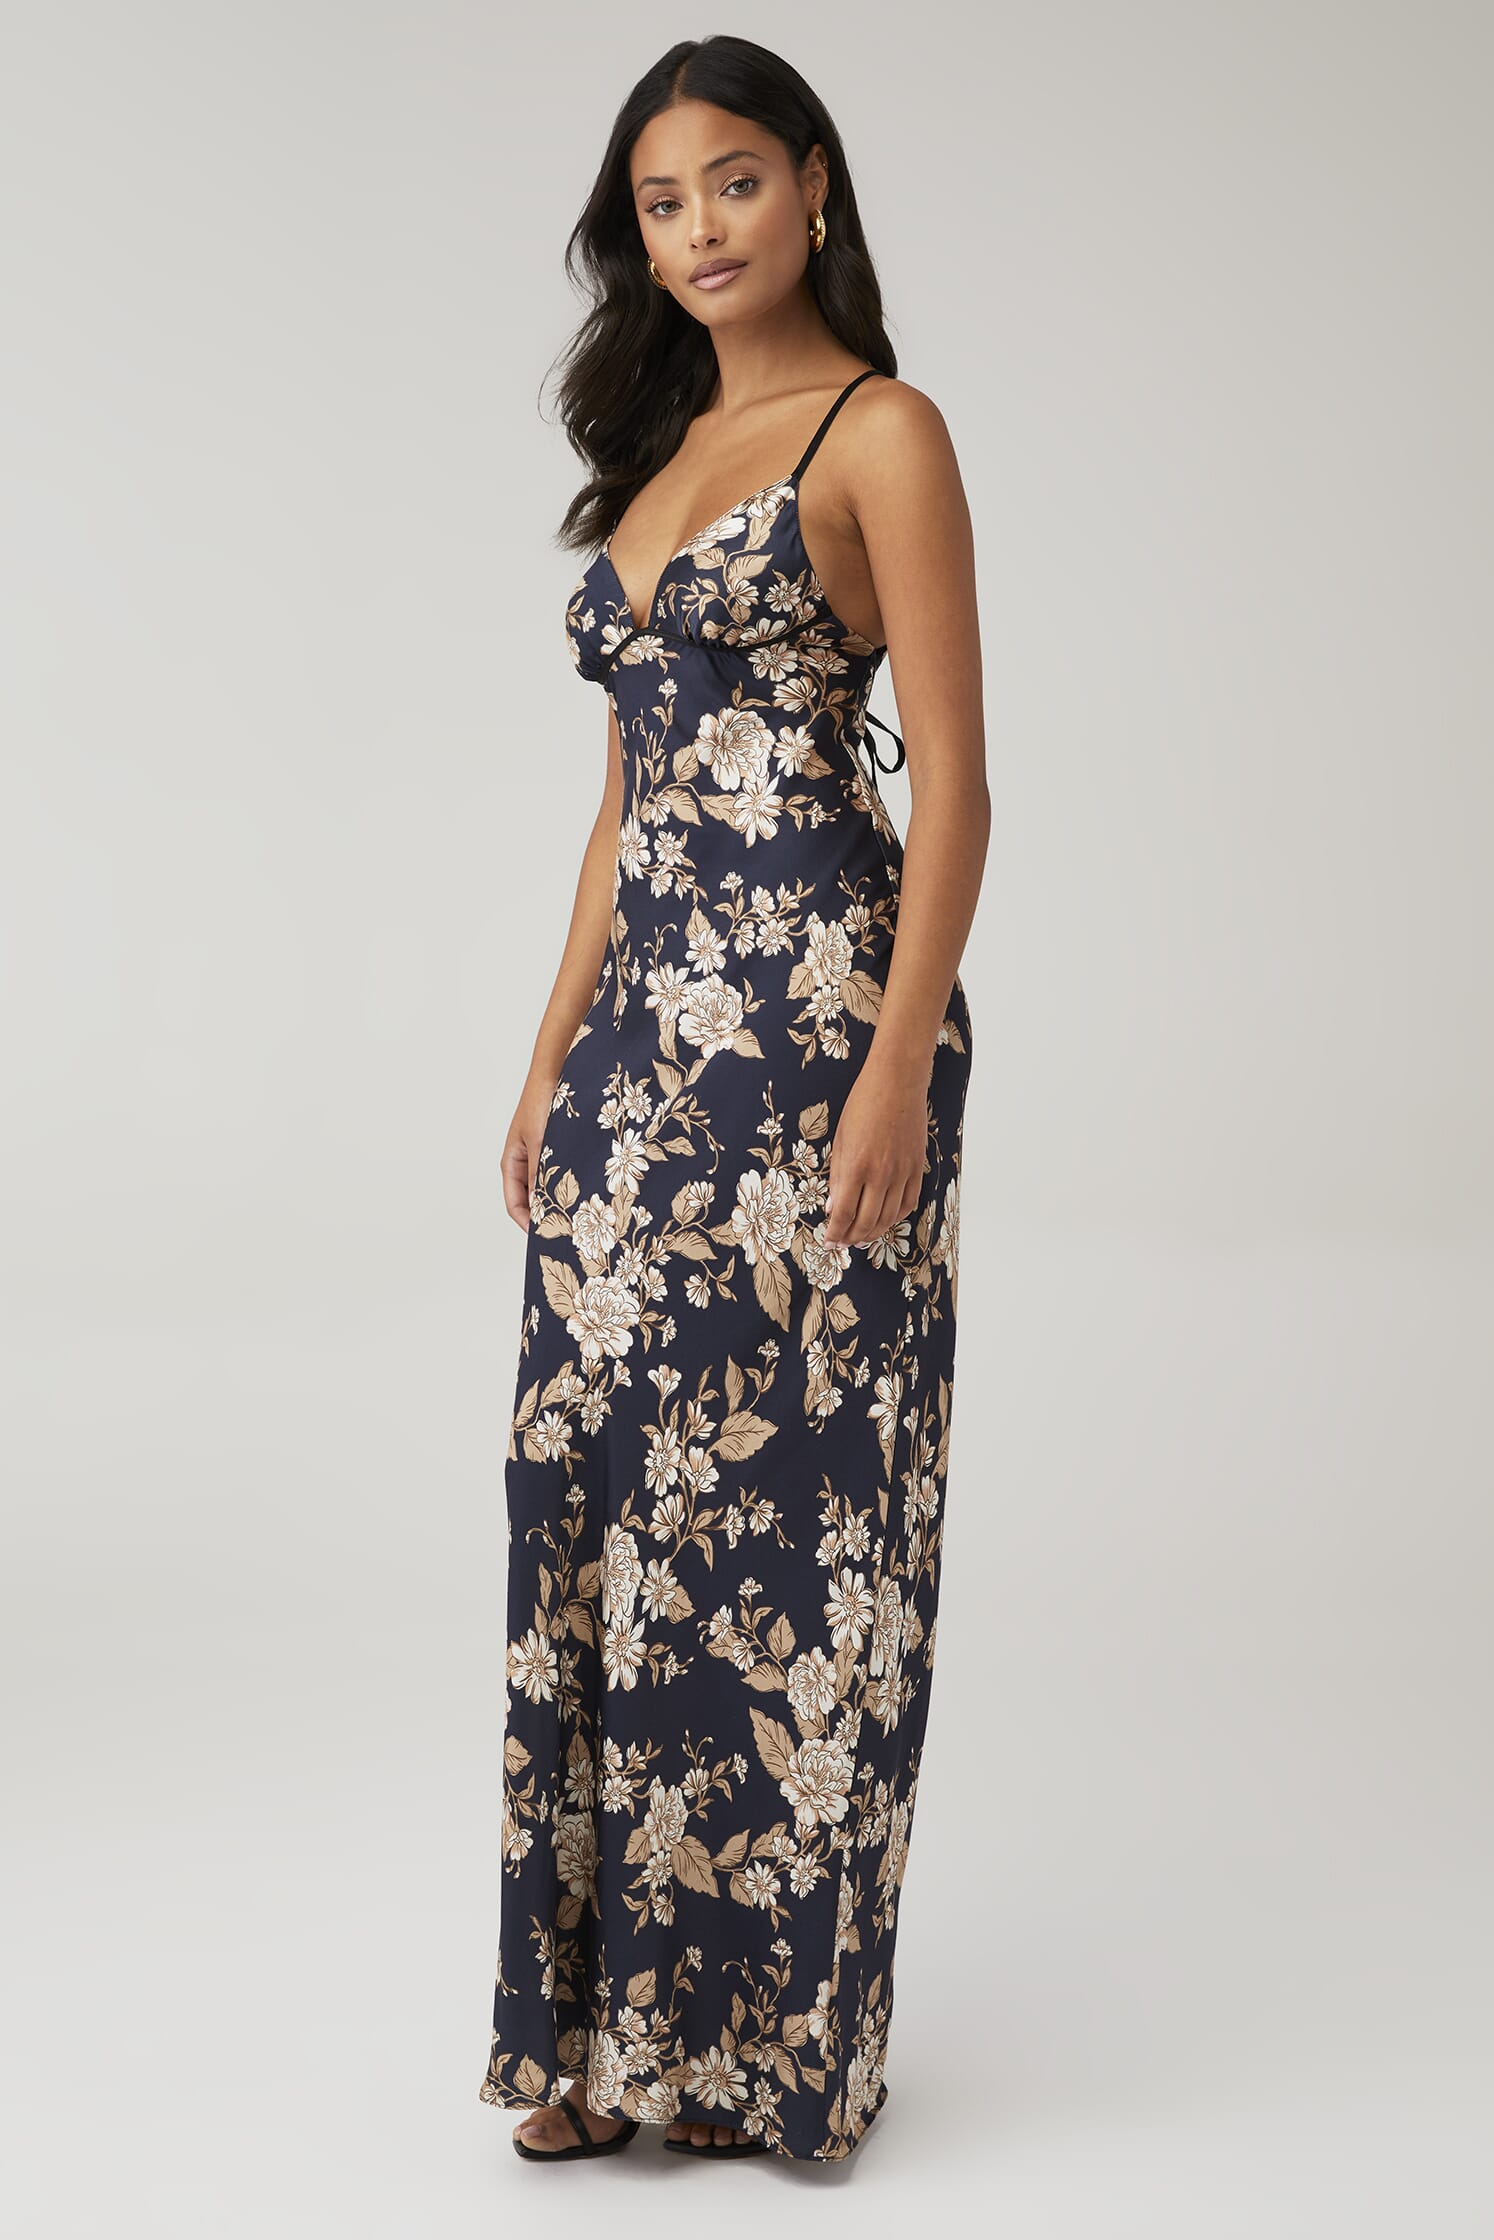 BEC + BRIDGE | Opaline Floral Silk Dress in Opaline Floral| FashionPass